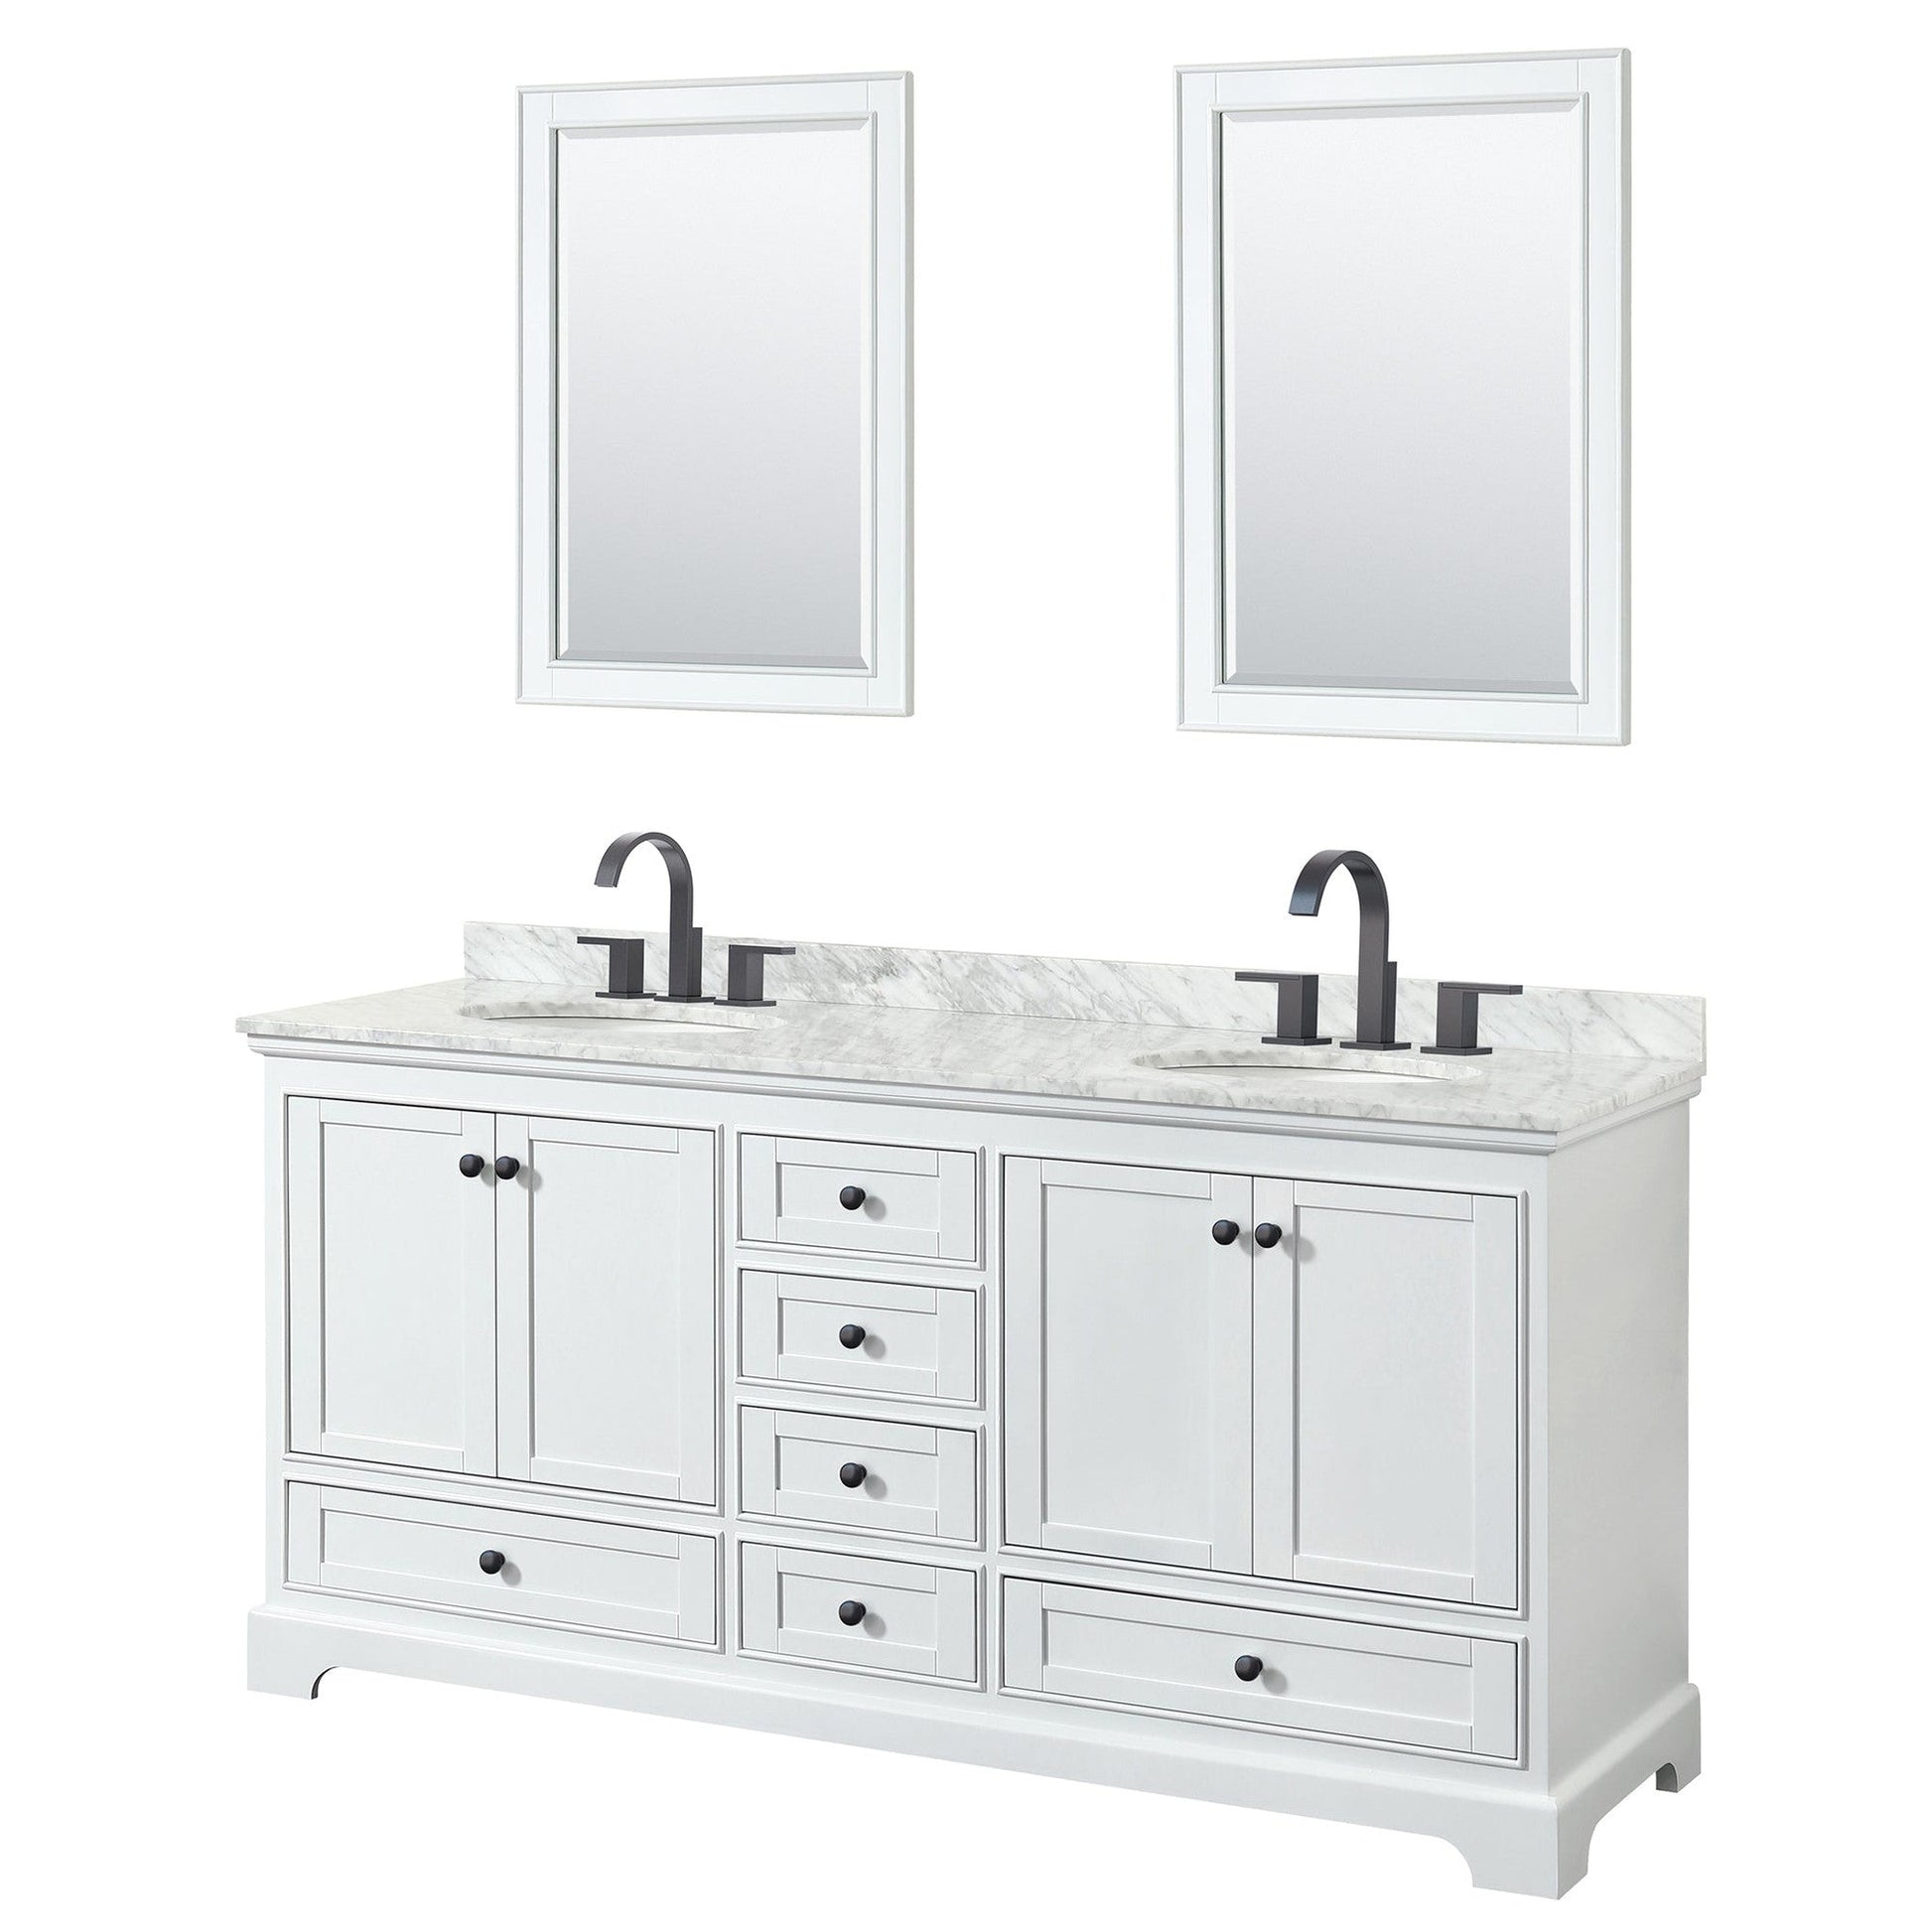 Deborah 72" Double Bathroom Vanity in White, White Carrara Marble Countertop, Undermount Oval Sinks, Matte Black Trim, 24" Mirrors